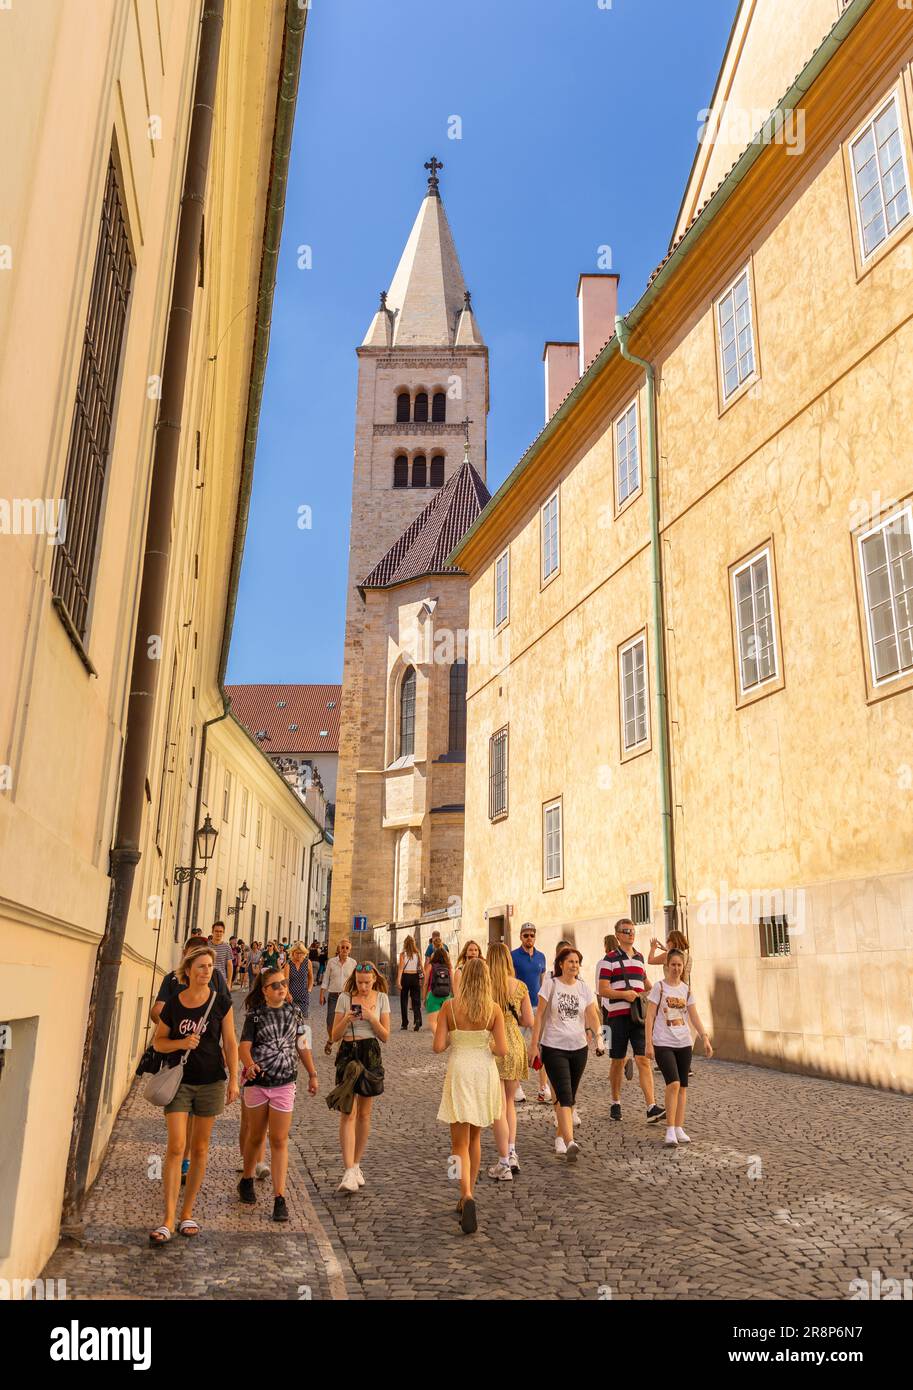 HRADCANY, PRAGUE, CZECH REPUBLIC, EUROPE - Tourists walk on street in Castle district. Stock Photo